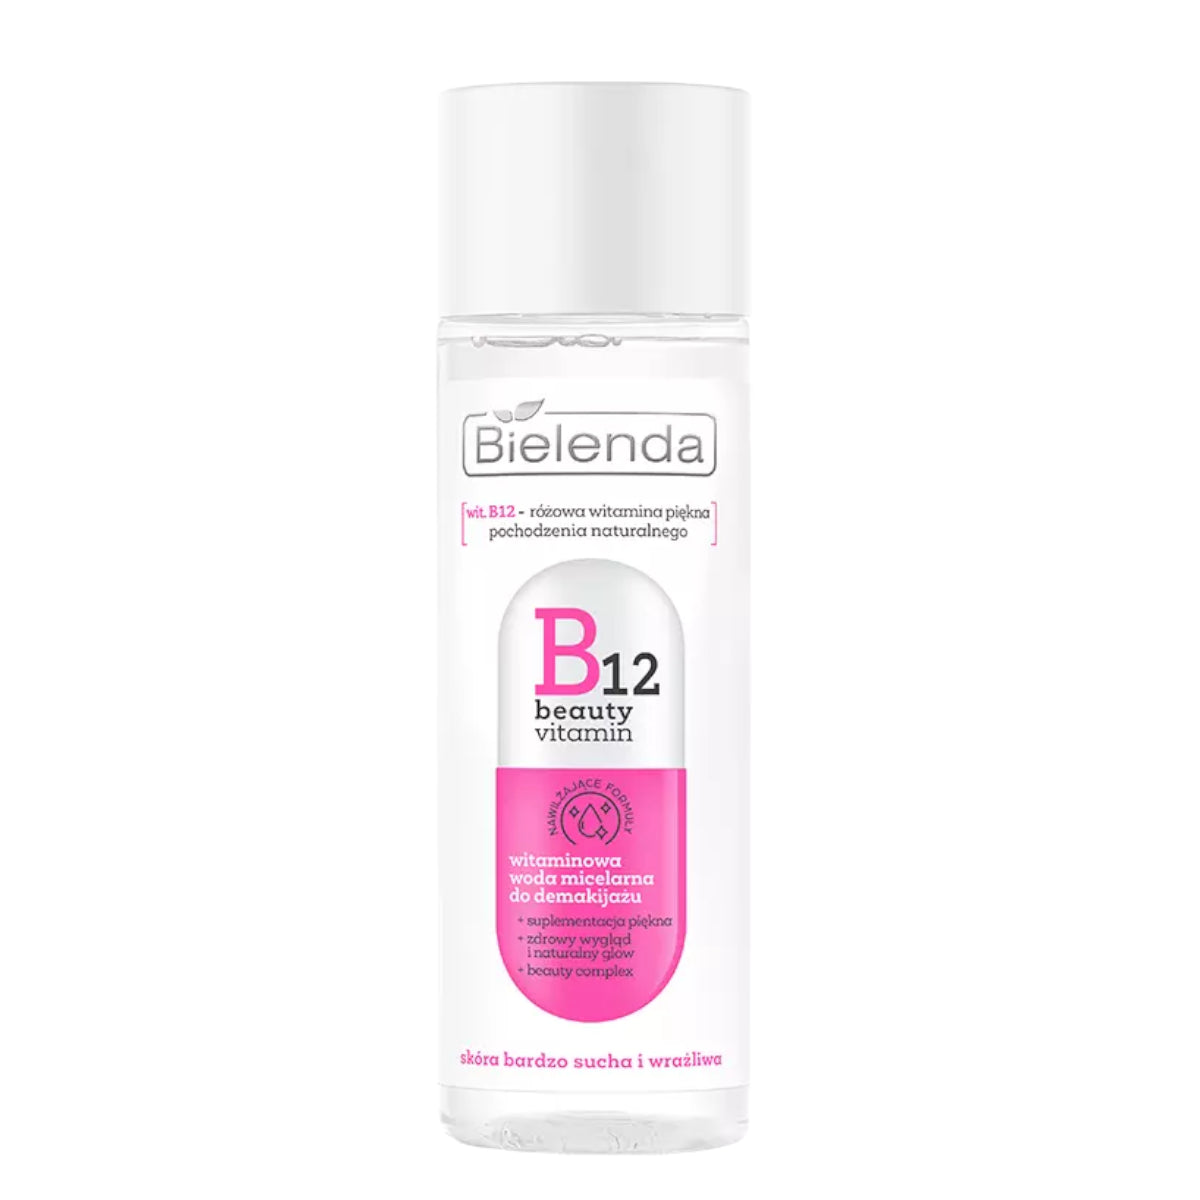 Bielenda B12 Beauty Vitamin Micellar Water Makeup Removal